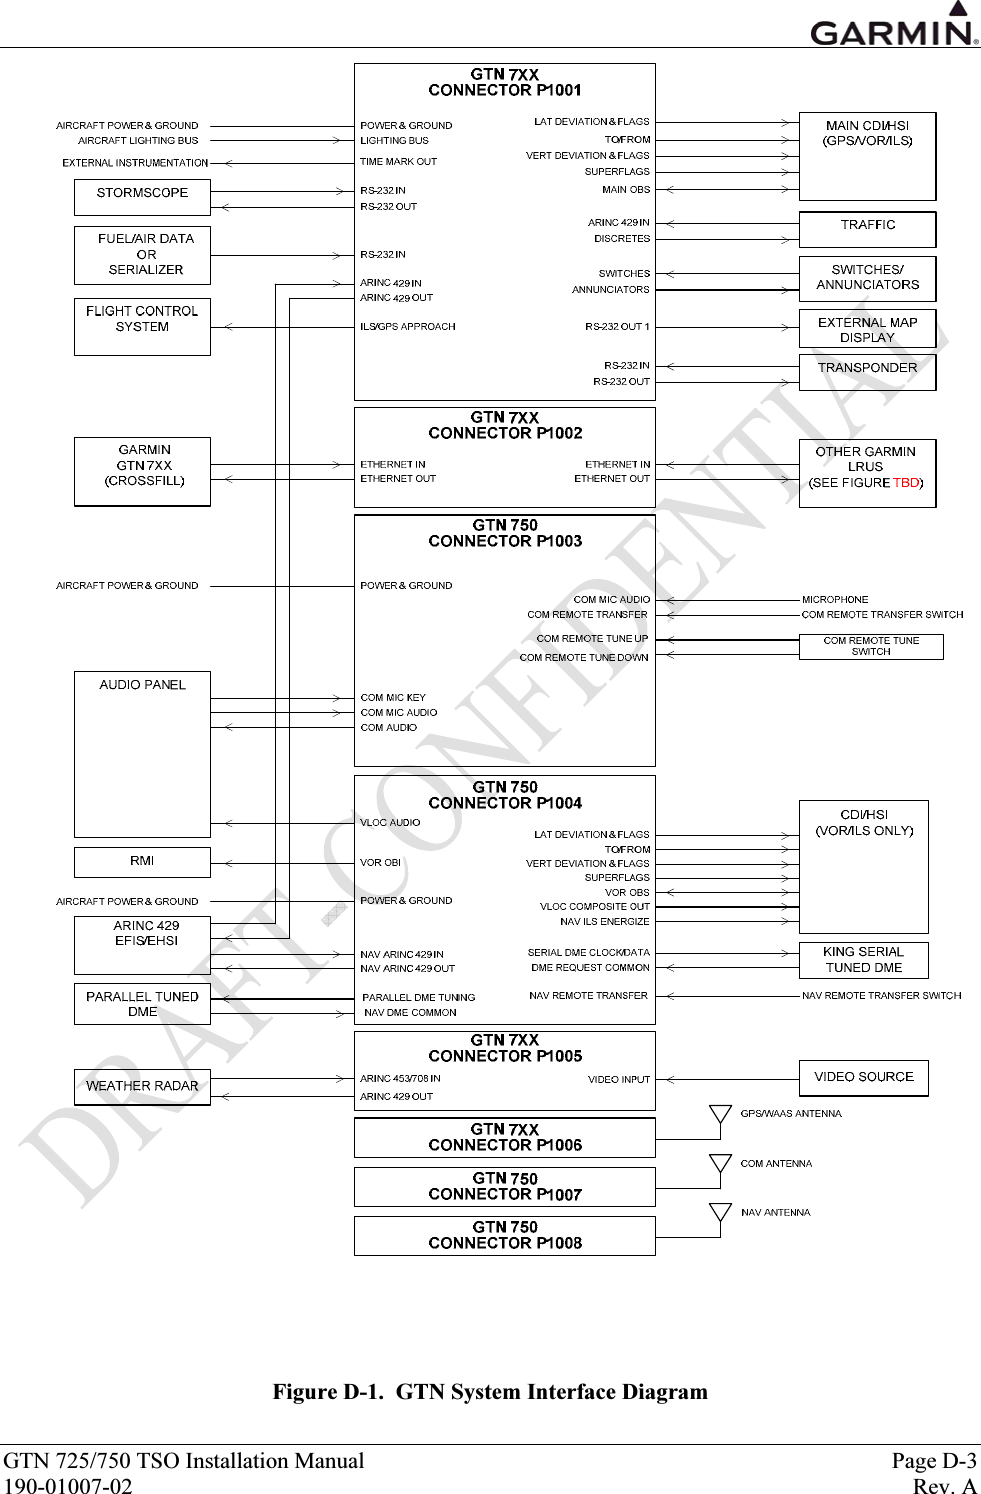  GTN 725/750 TSO Installation Manual  Page D-3 190-01007-02  Rev. A  Figure D-1.  GTN System Interface Diagram 